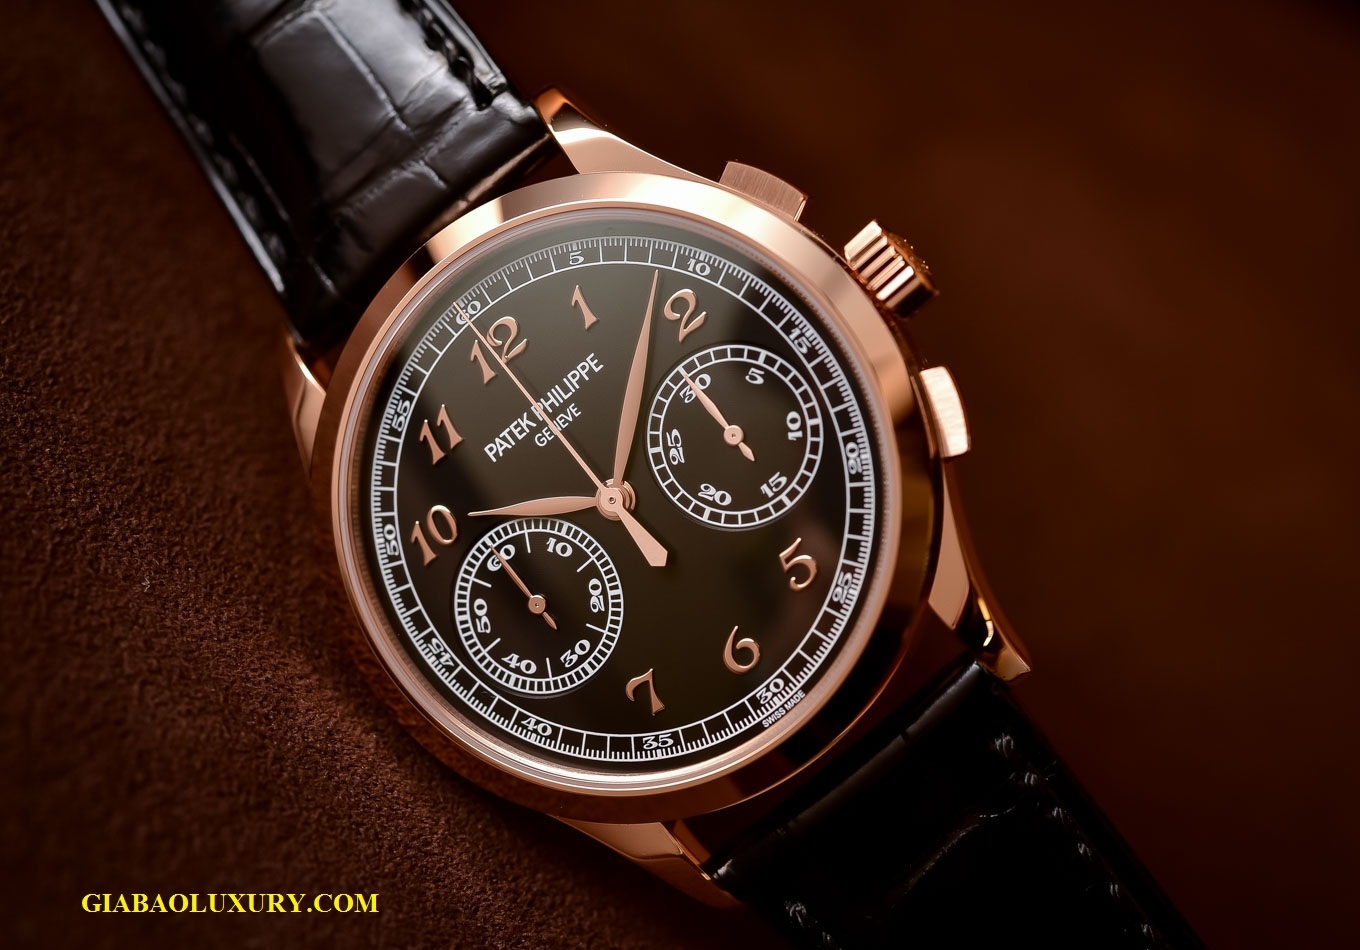 Giới thiệu: Đồng hồ Patek Philippe Chronograph 5172G mới Baselworld 2019